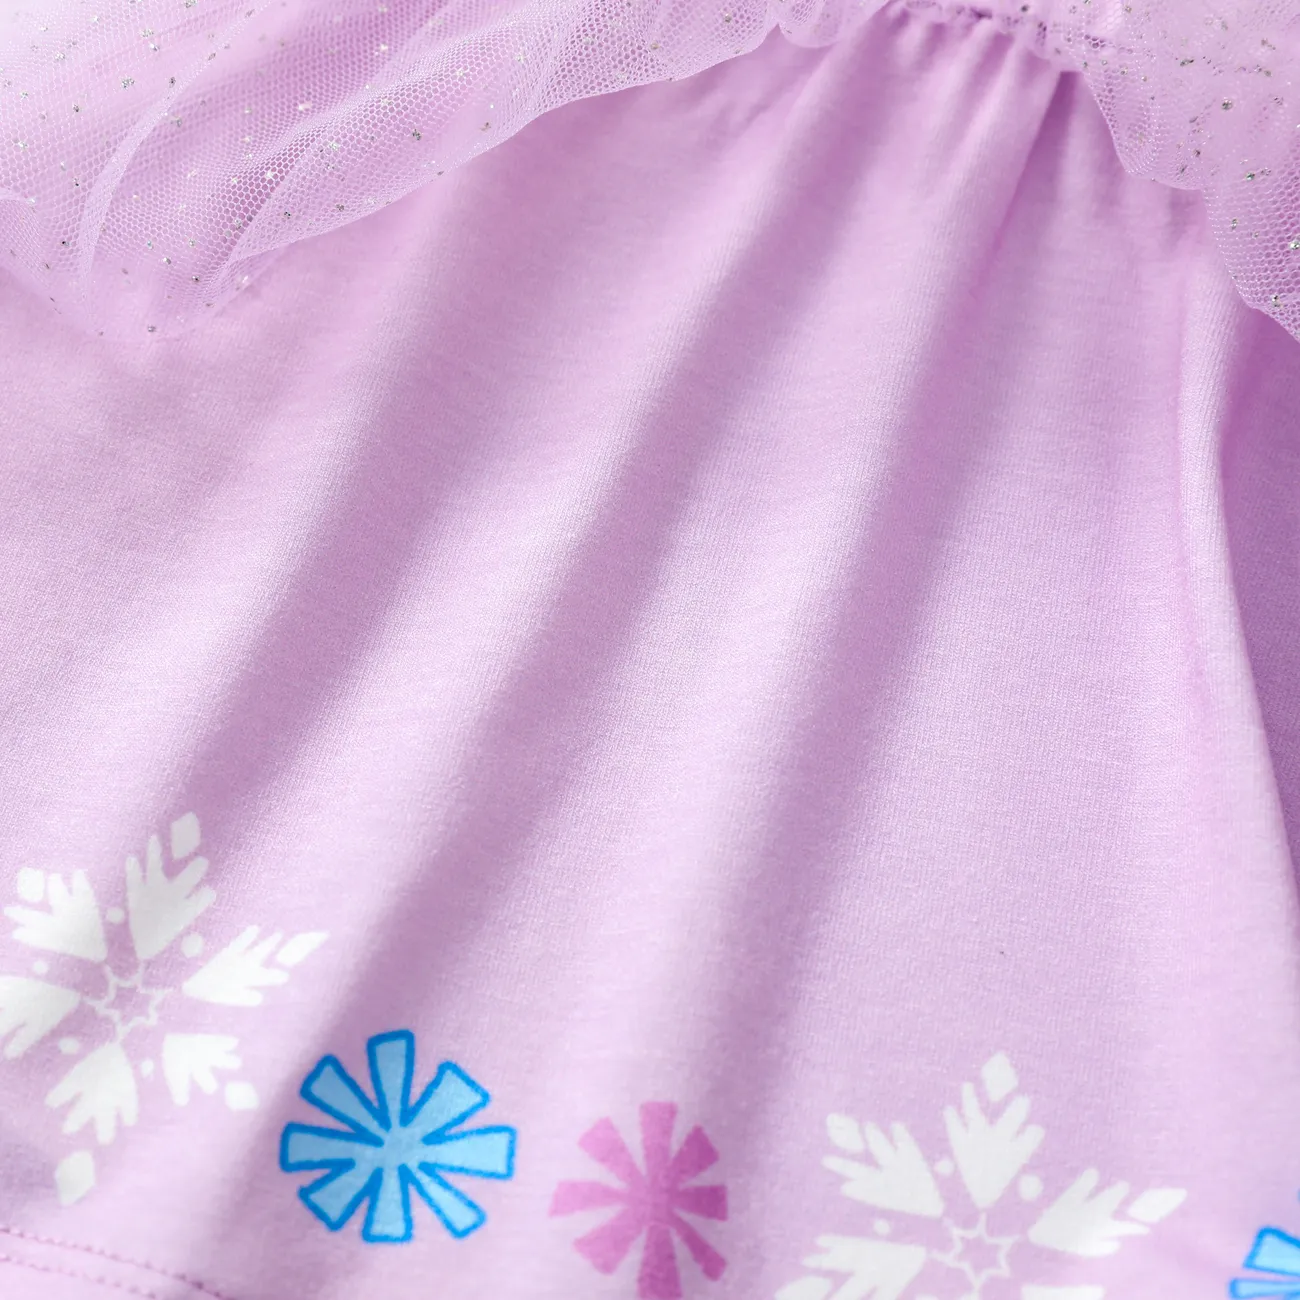 Disney Frozen Toddler Girls Elsa Naia™ Personagem Print Set/Top Roxa big image 1